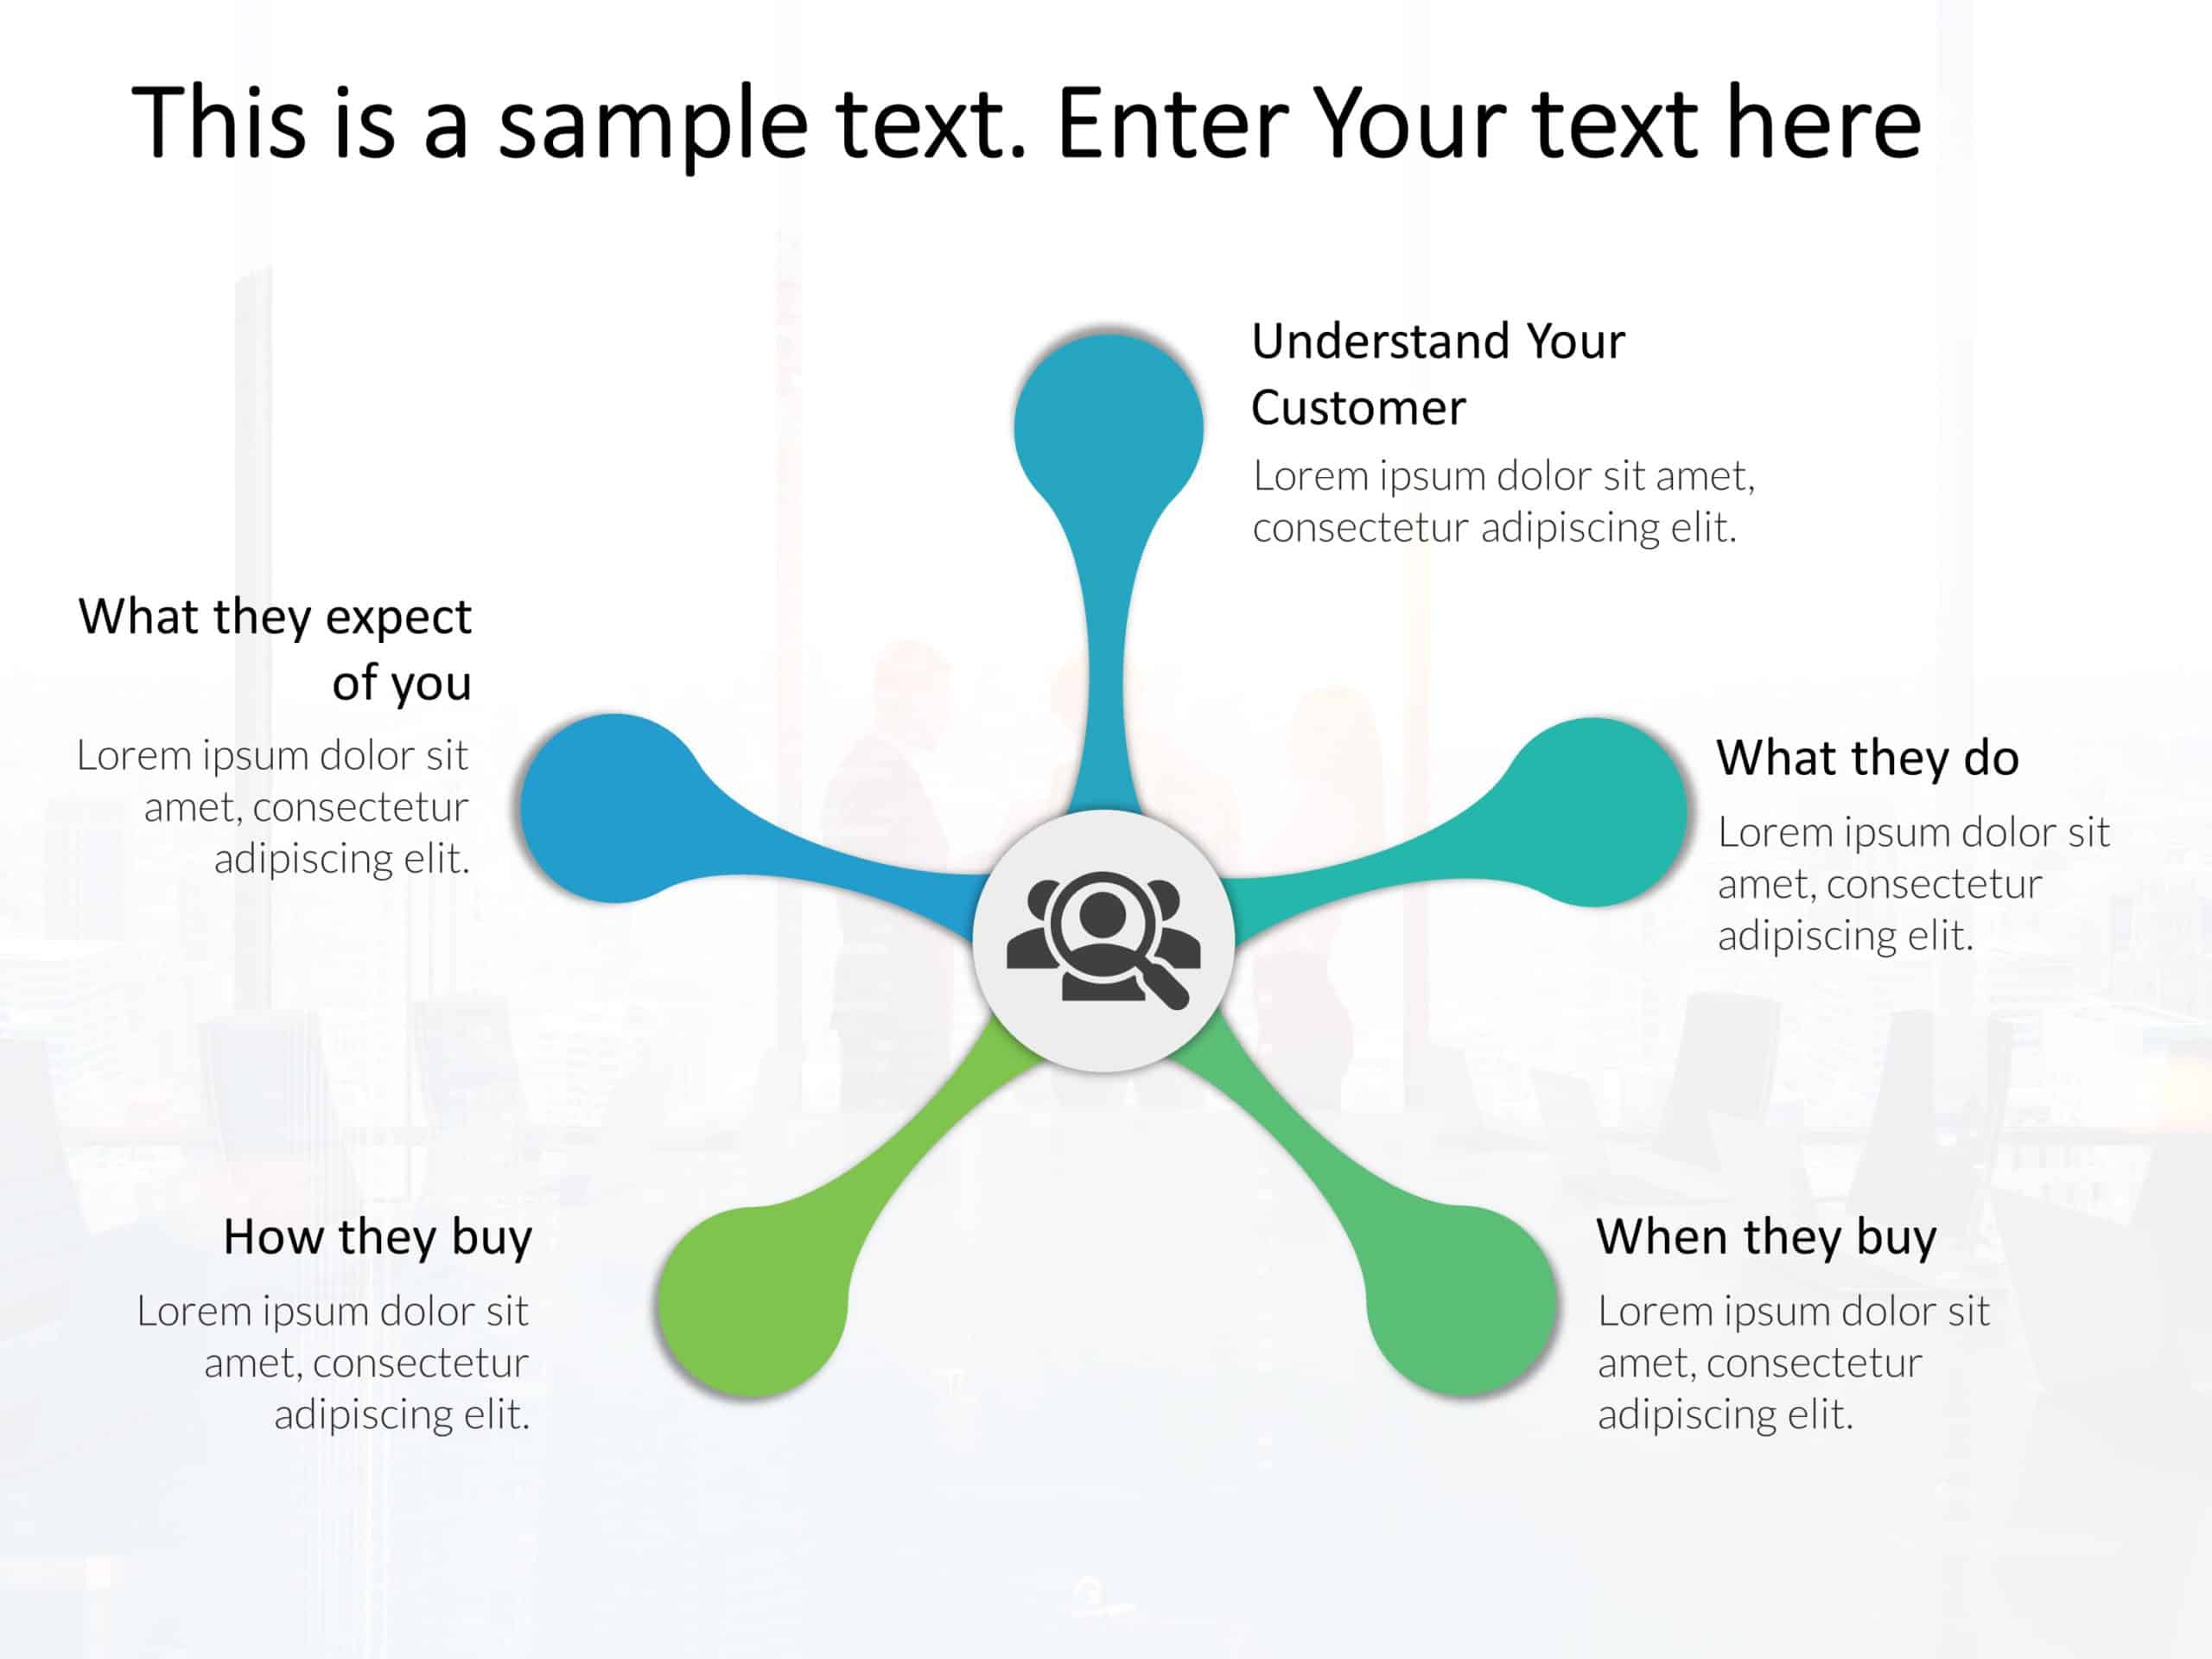 Consumer Analysis PowerPoint Template & Google Slides Theme